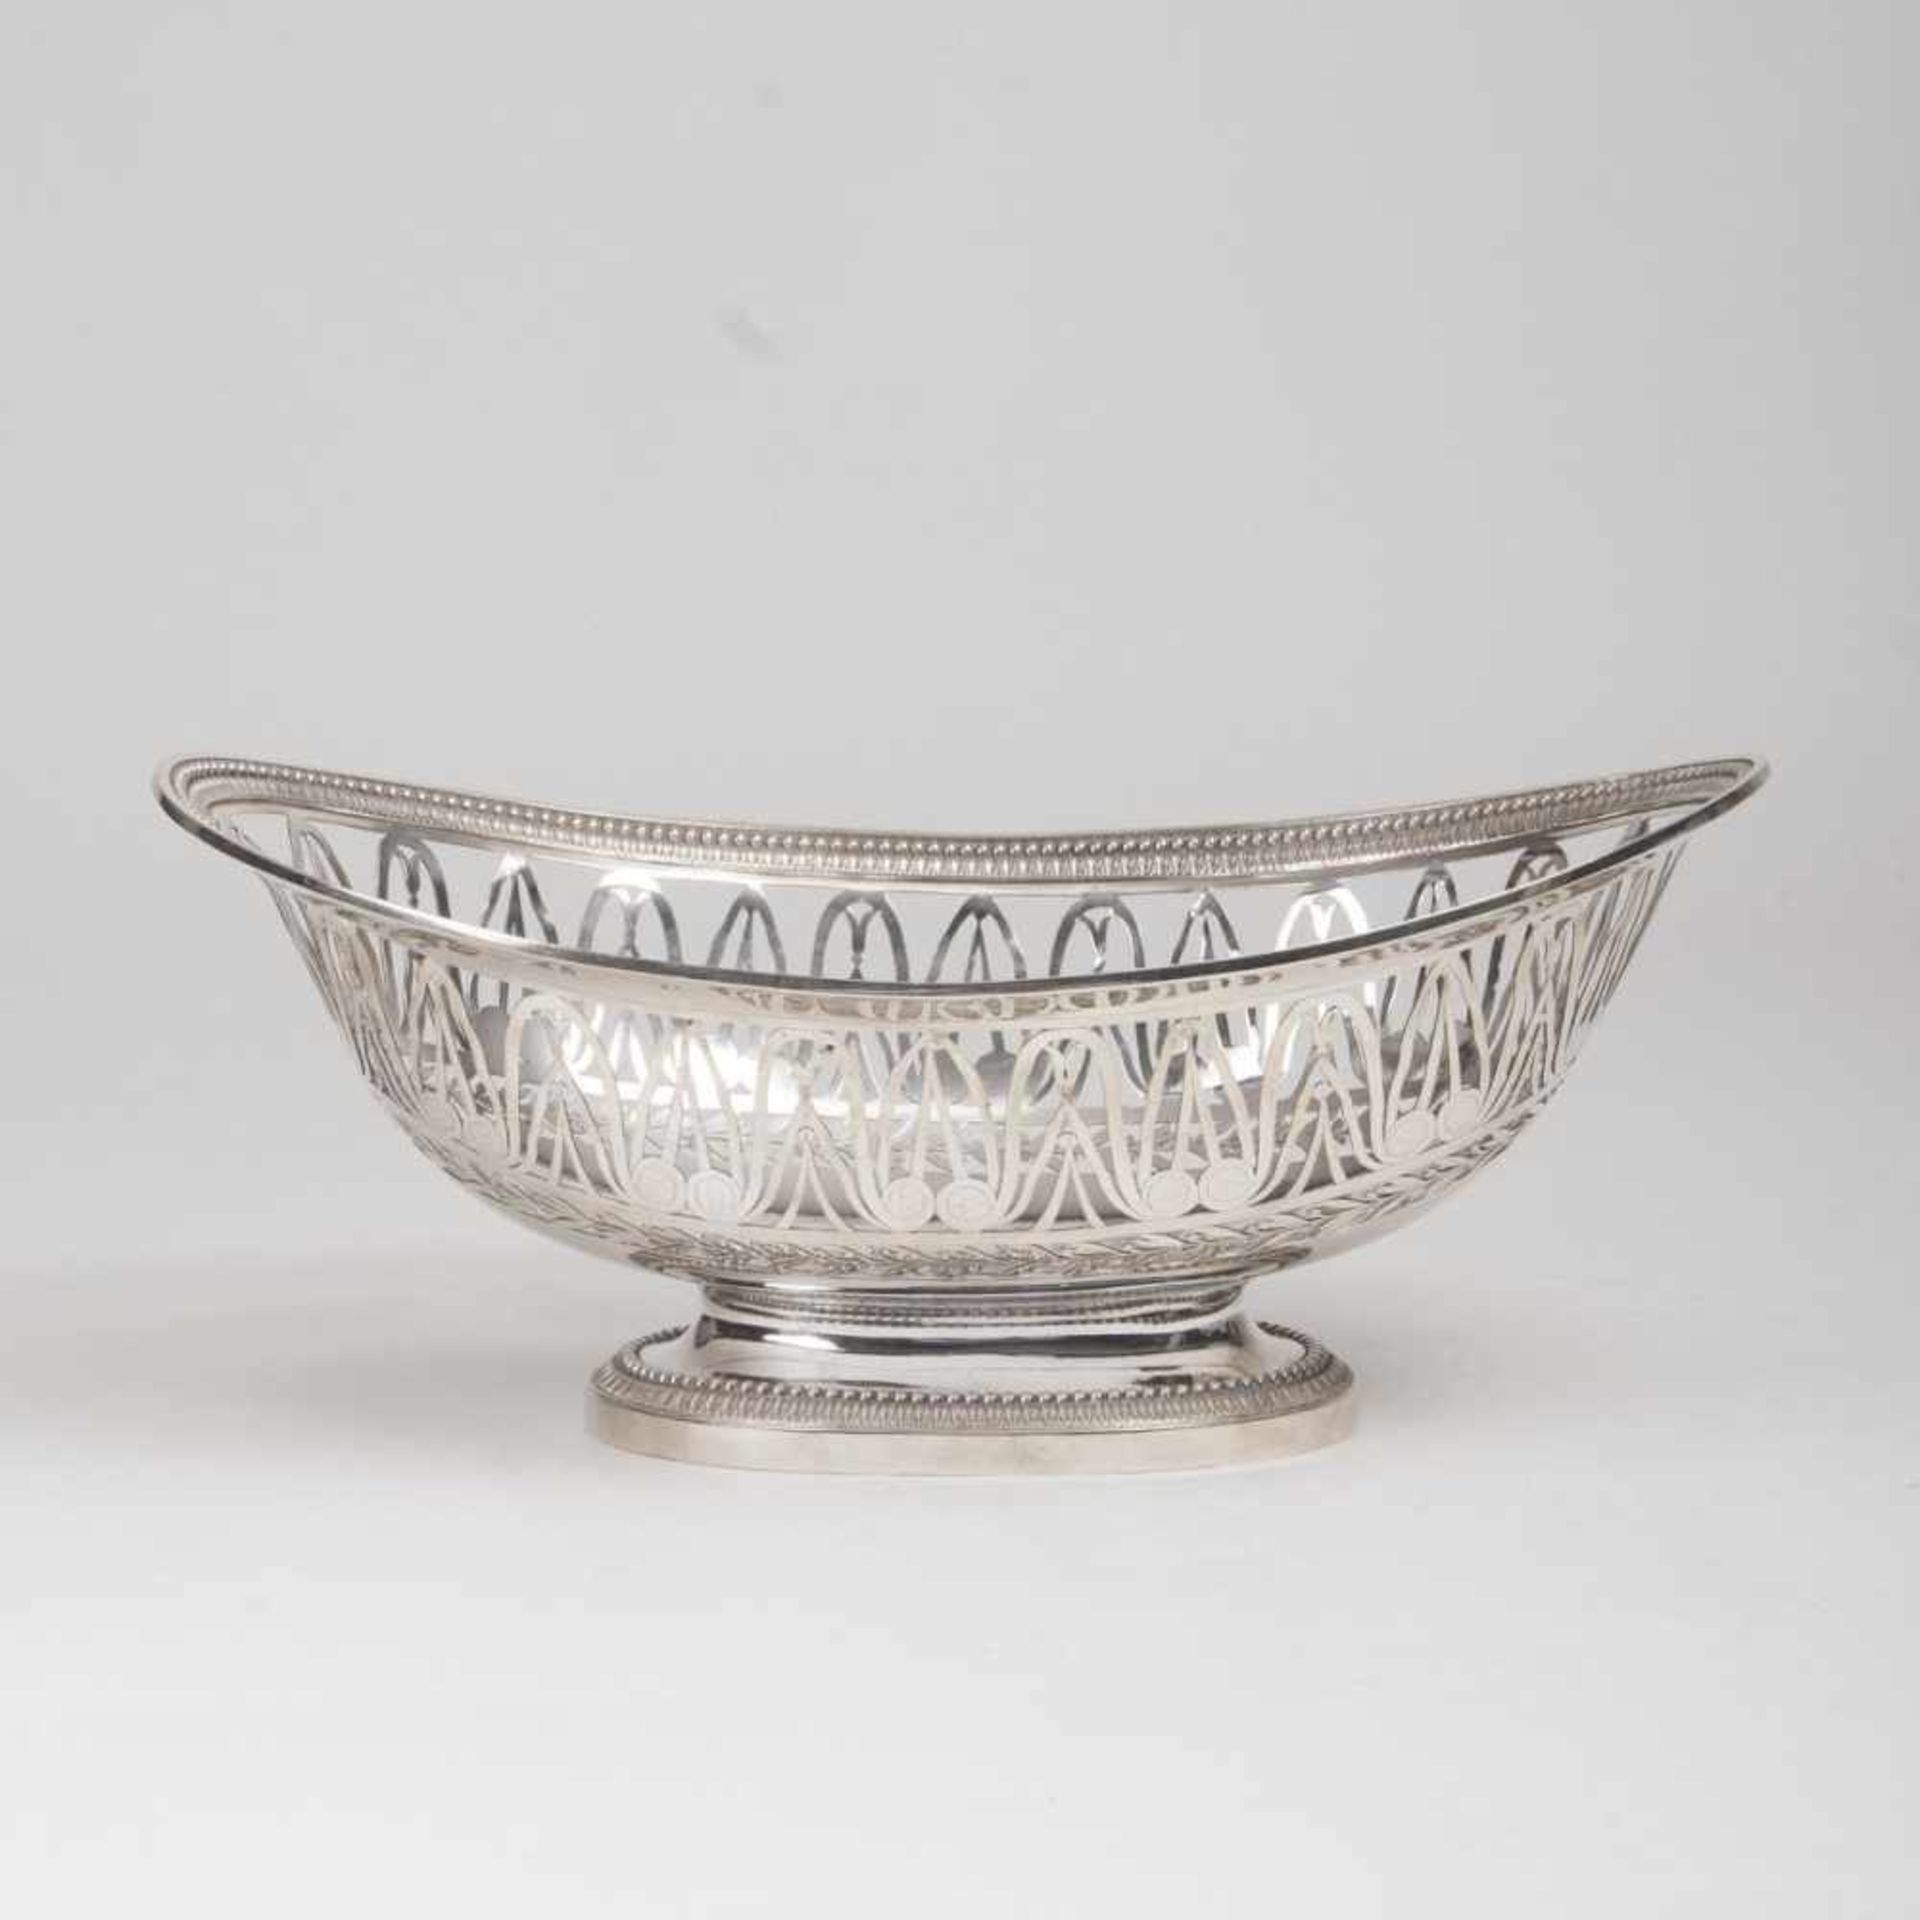 A Empire BowlParis, around 1820. Silver, marked. Assaymark: guarantee- and hallmark from 1819-38, MM